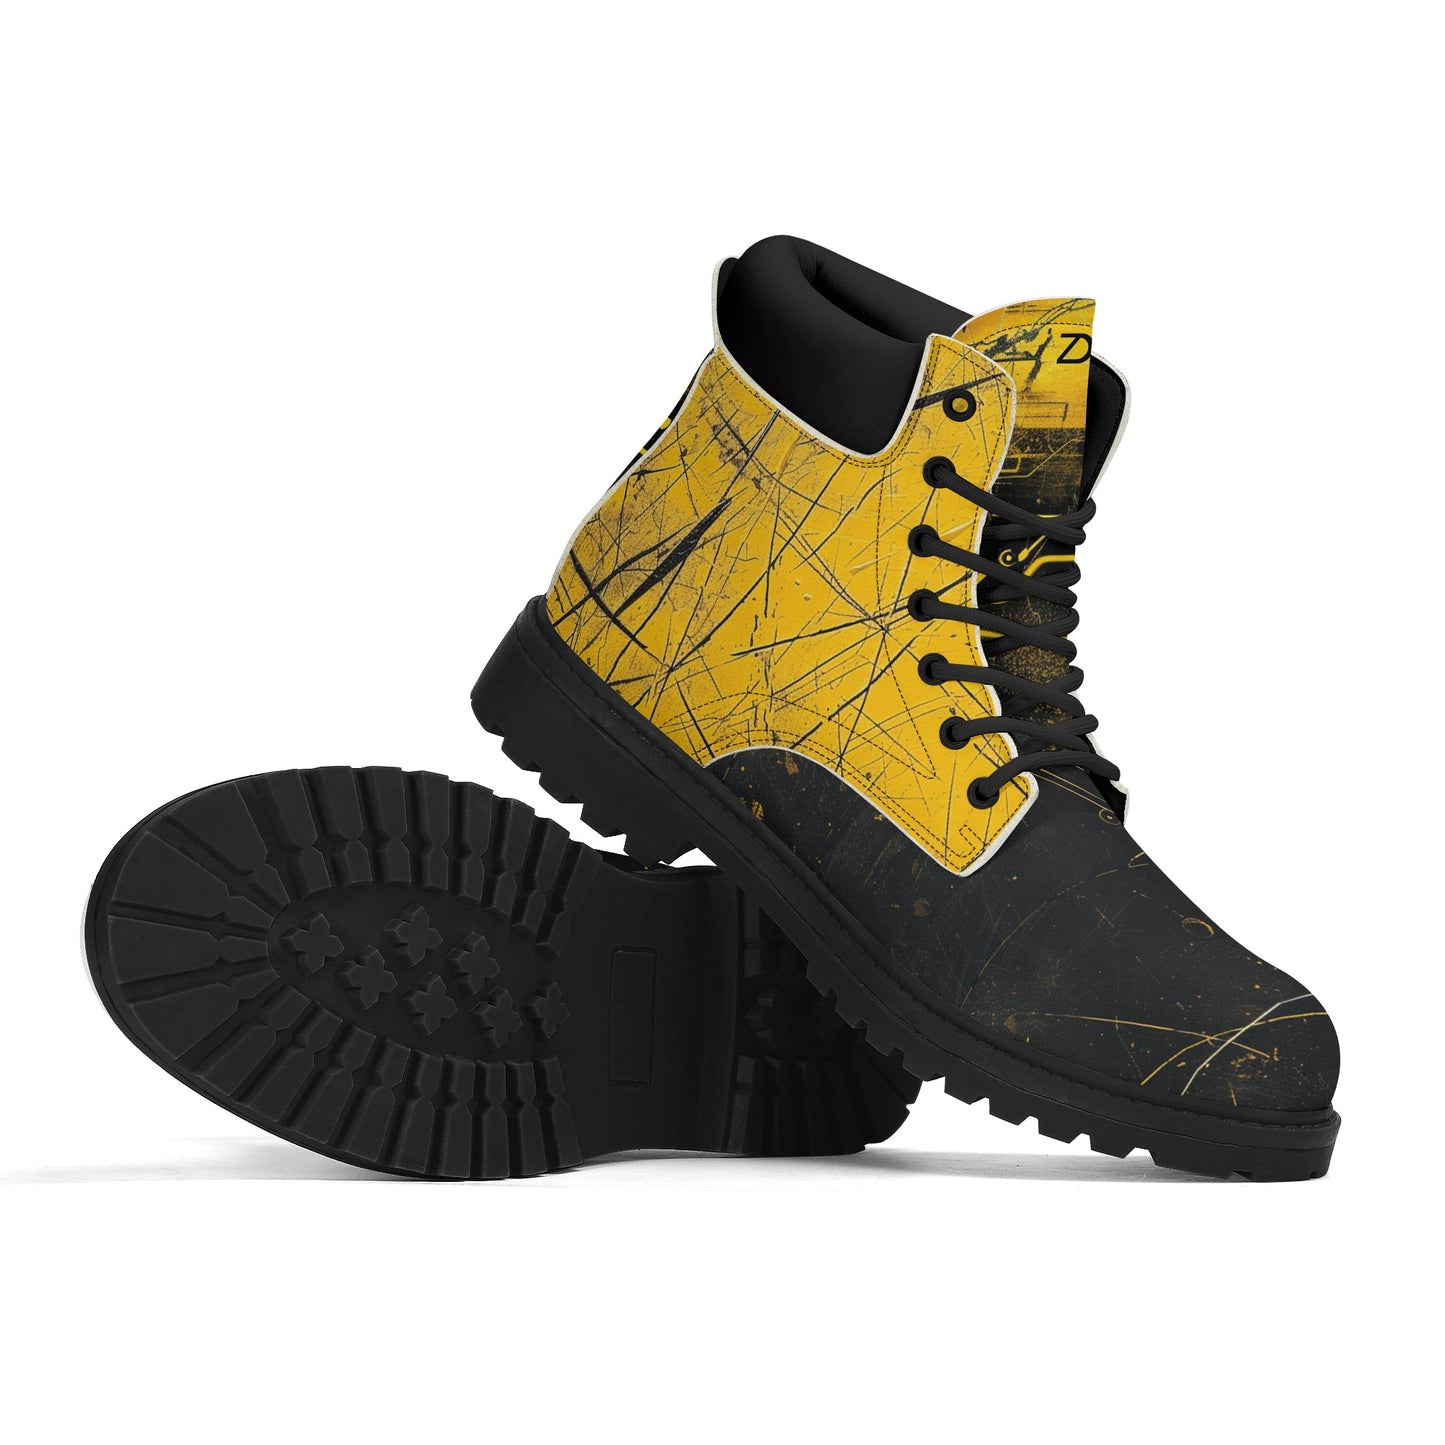 Neduz Cyberpunk Grunge All-Season Unisex Boots - Waterproof Eco-Friendly PU Leather with Black Outsole